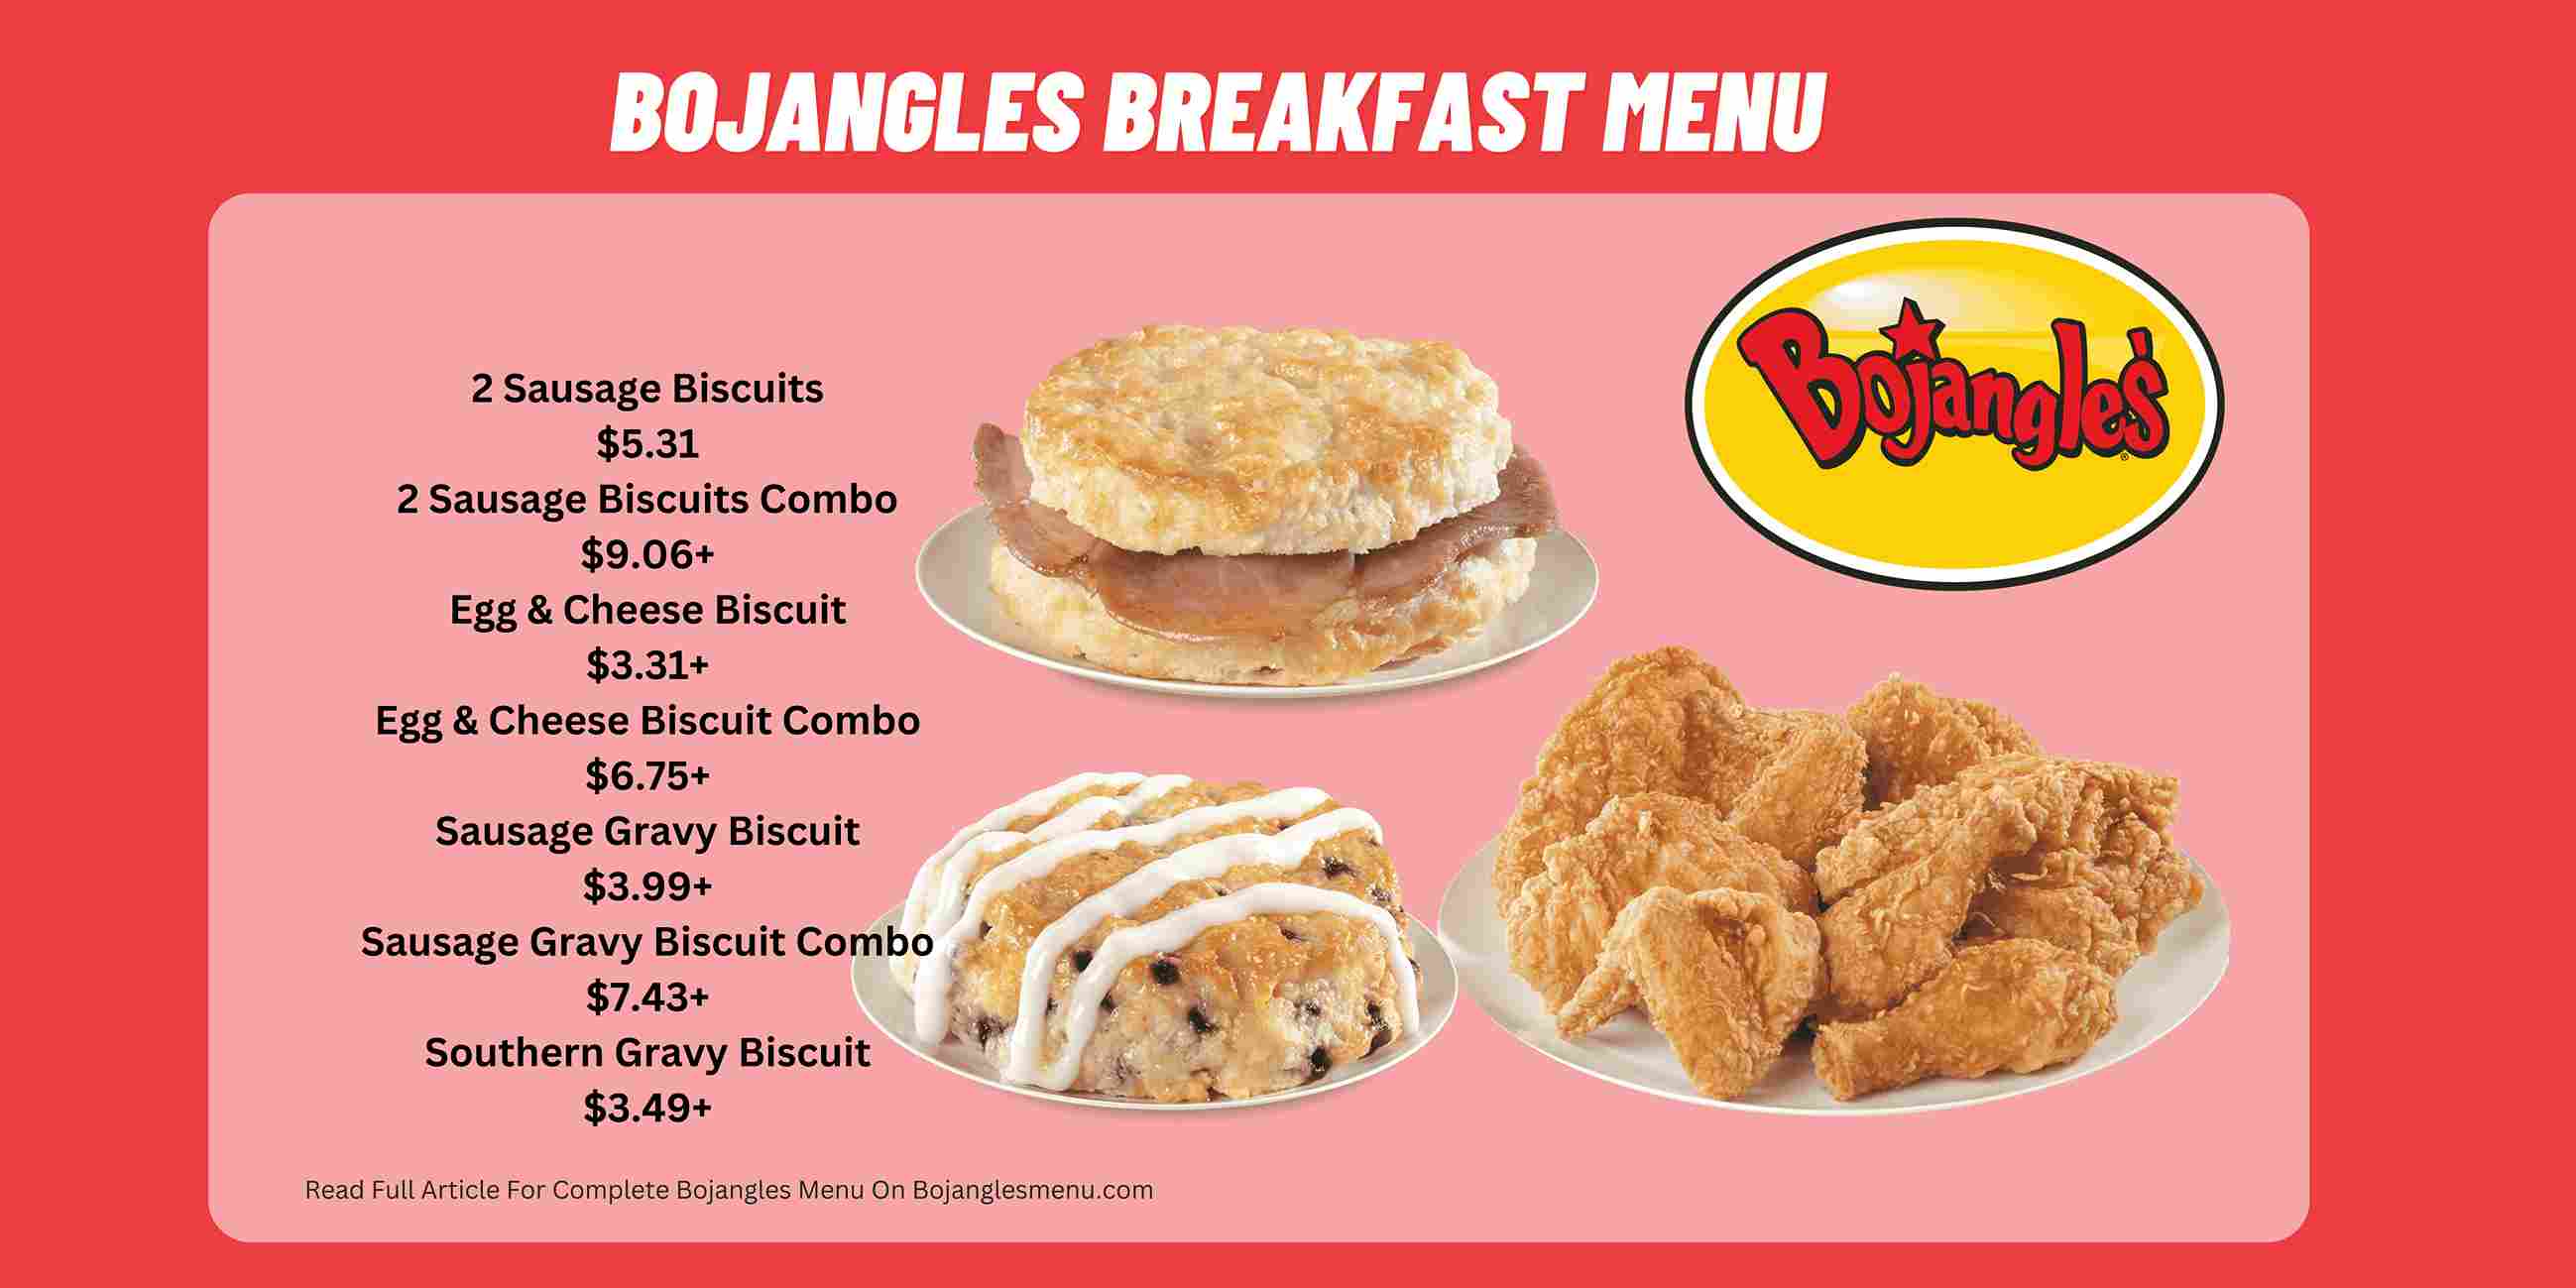 Bojangles' Menu Breakfast Platter: A Morning Feast!